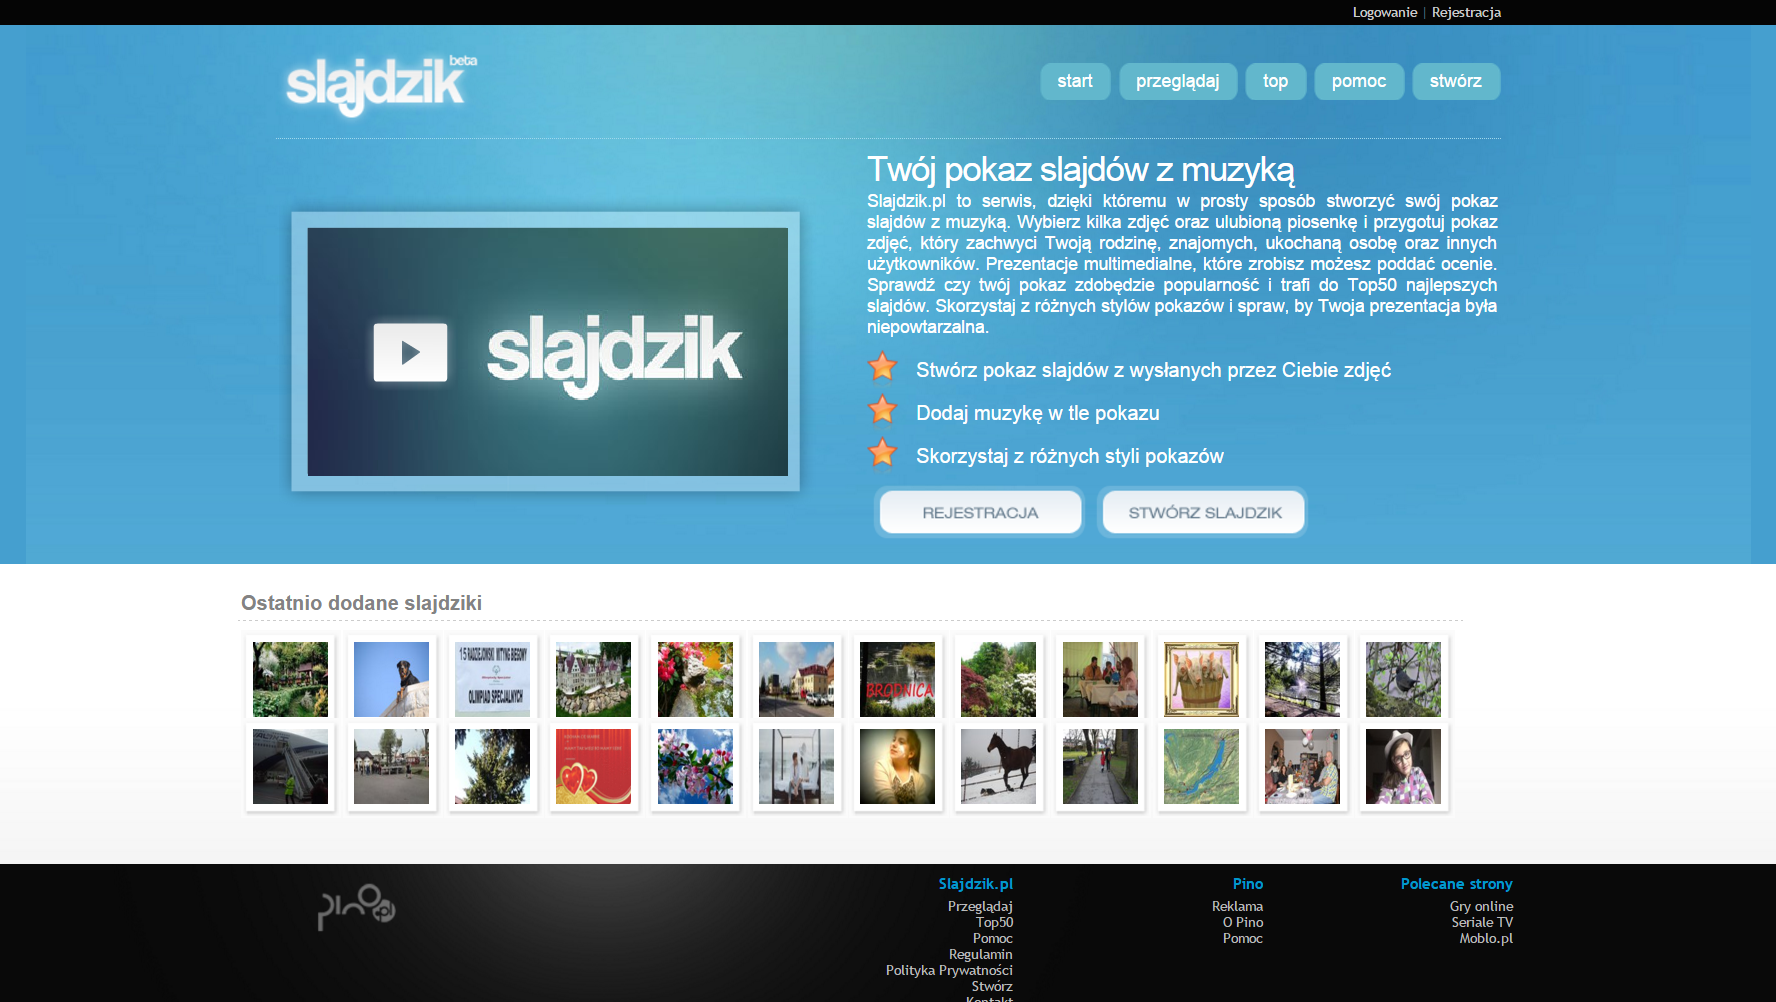 Proyecto Slajdzik.pl